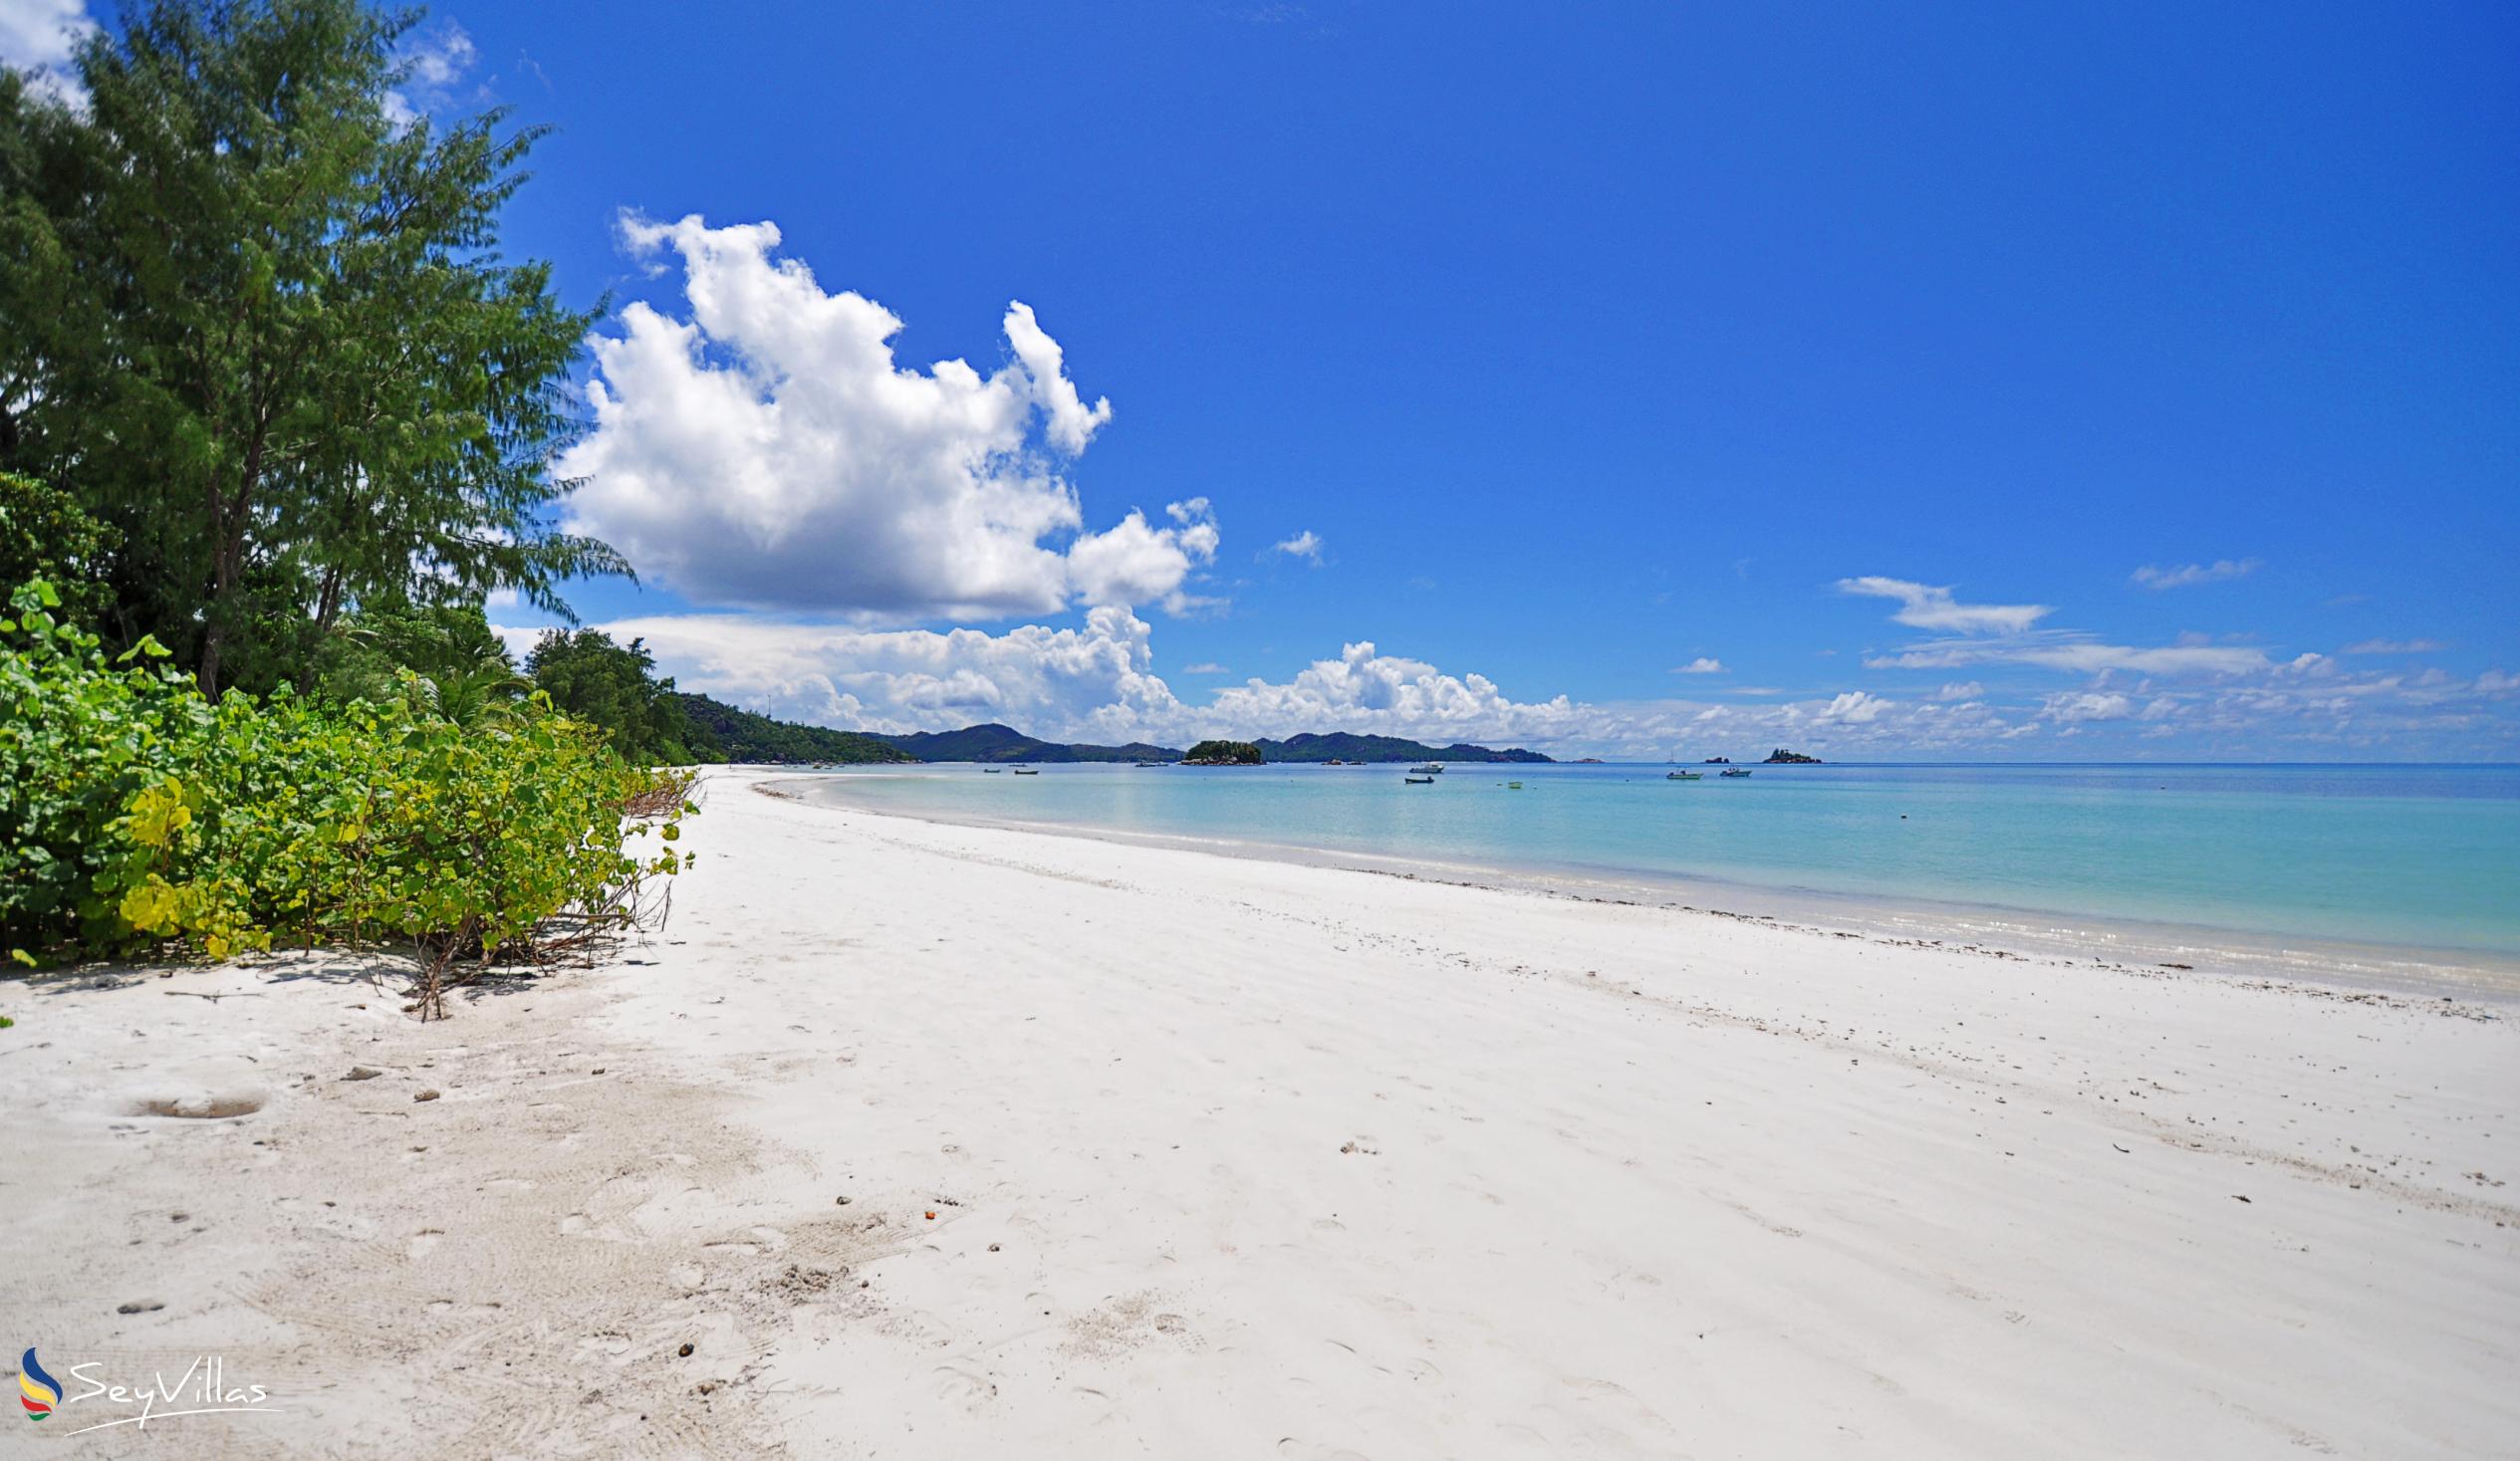 Photo 76: Cote d'Or Footprints - Beaches - Praslin (Seychelles)